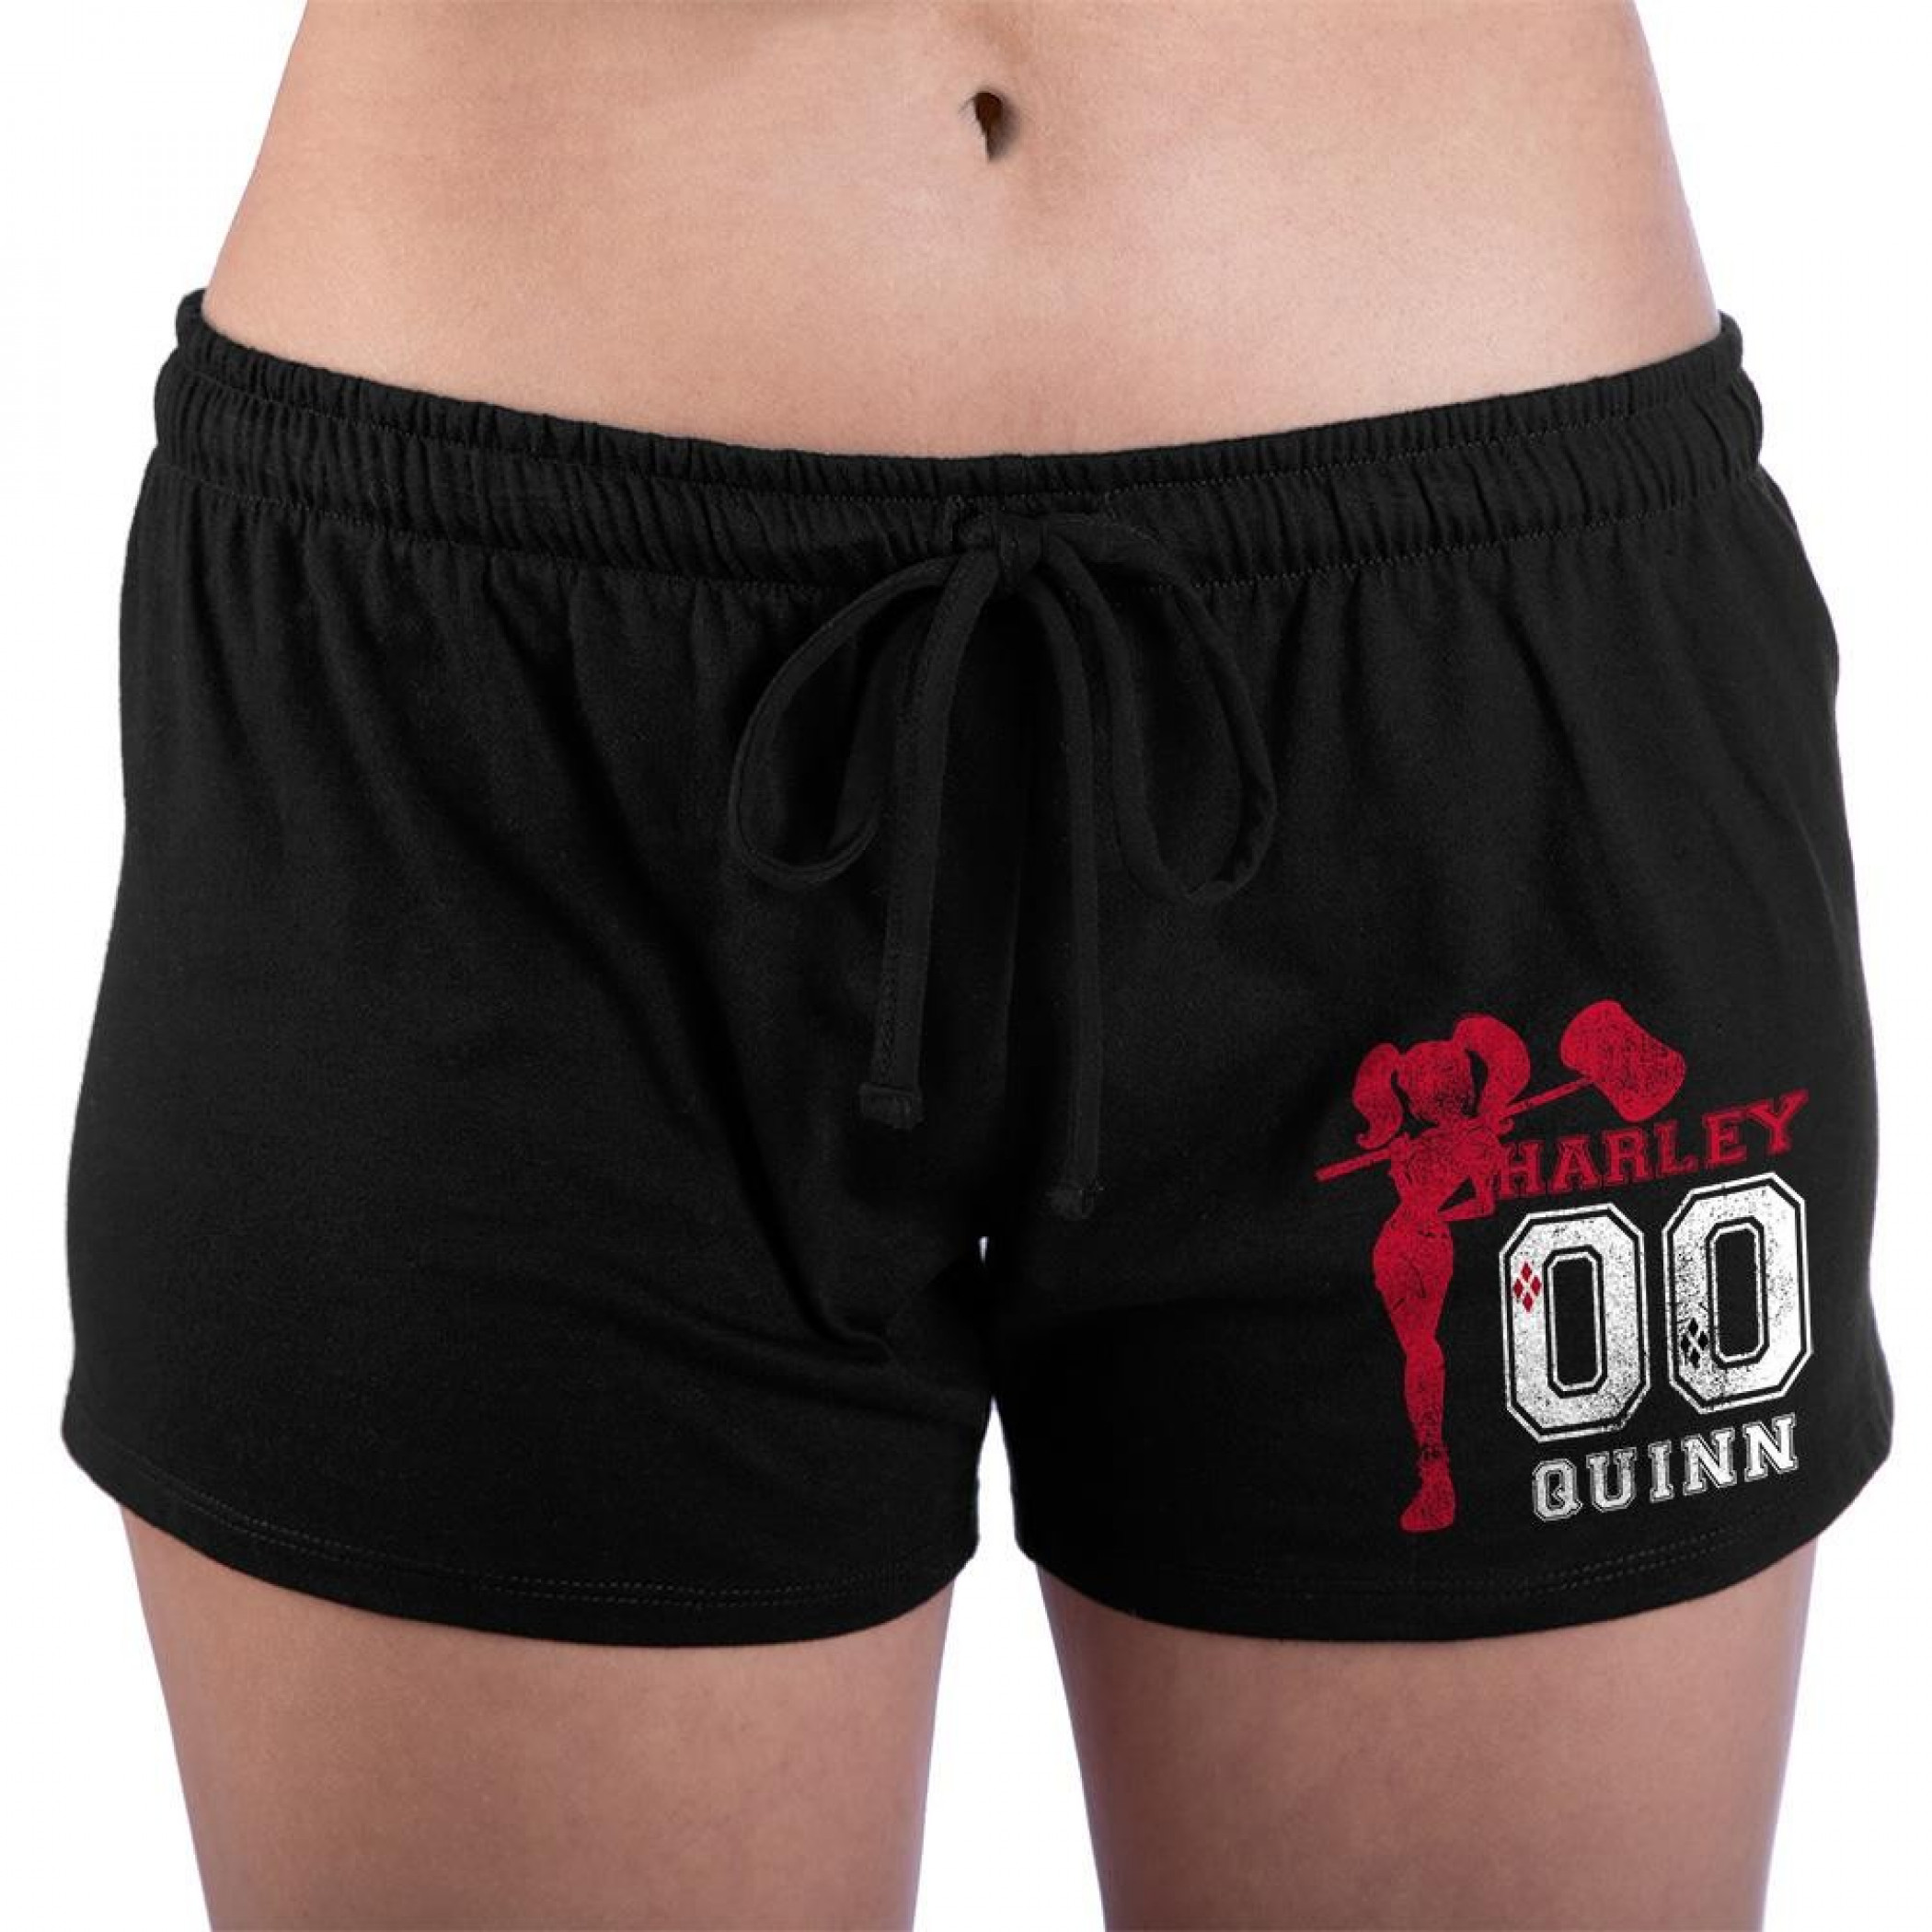 Harley Quinn Women's Sleep Shorts